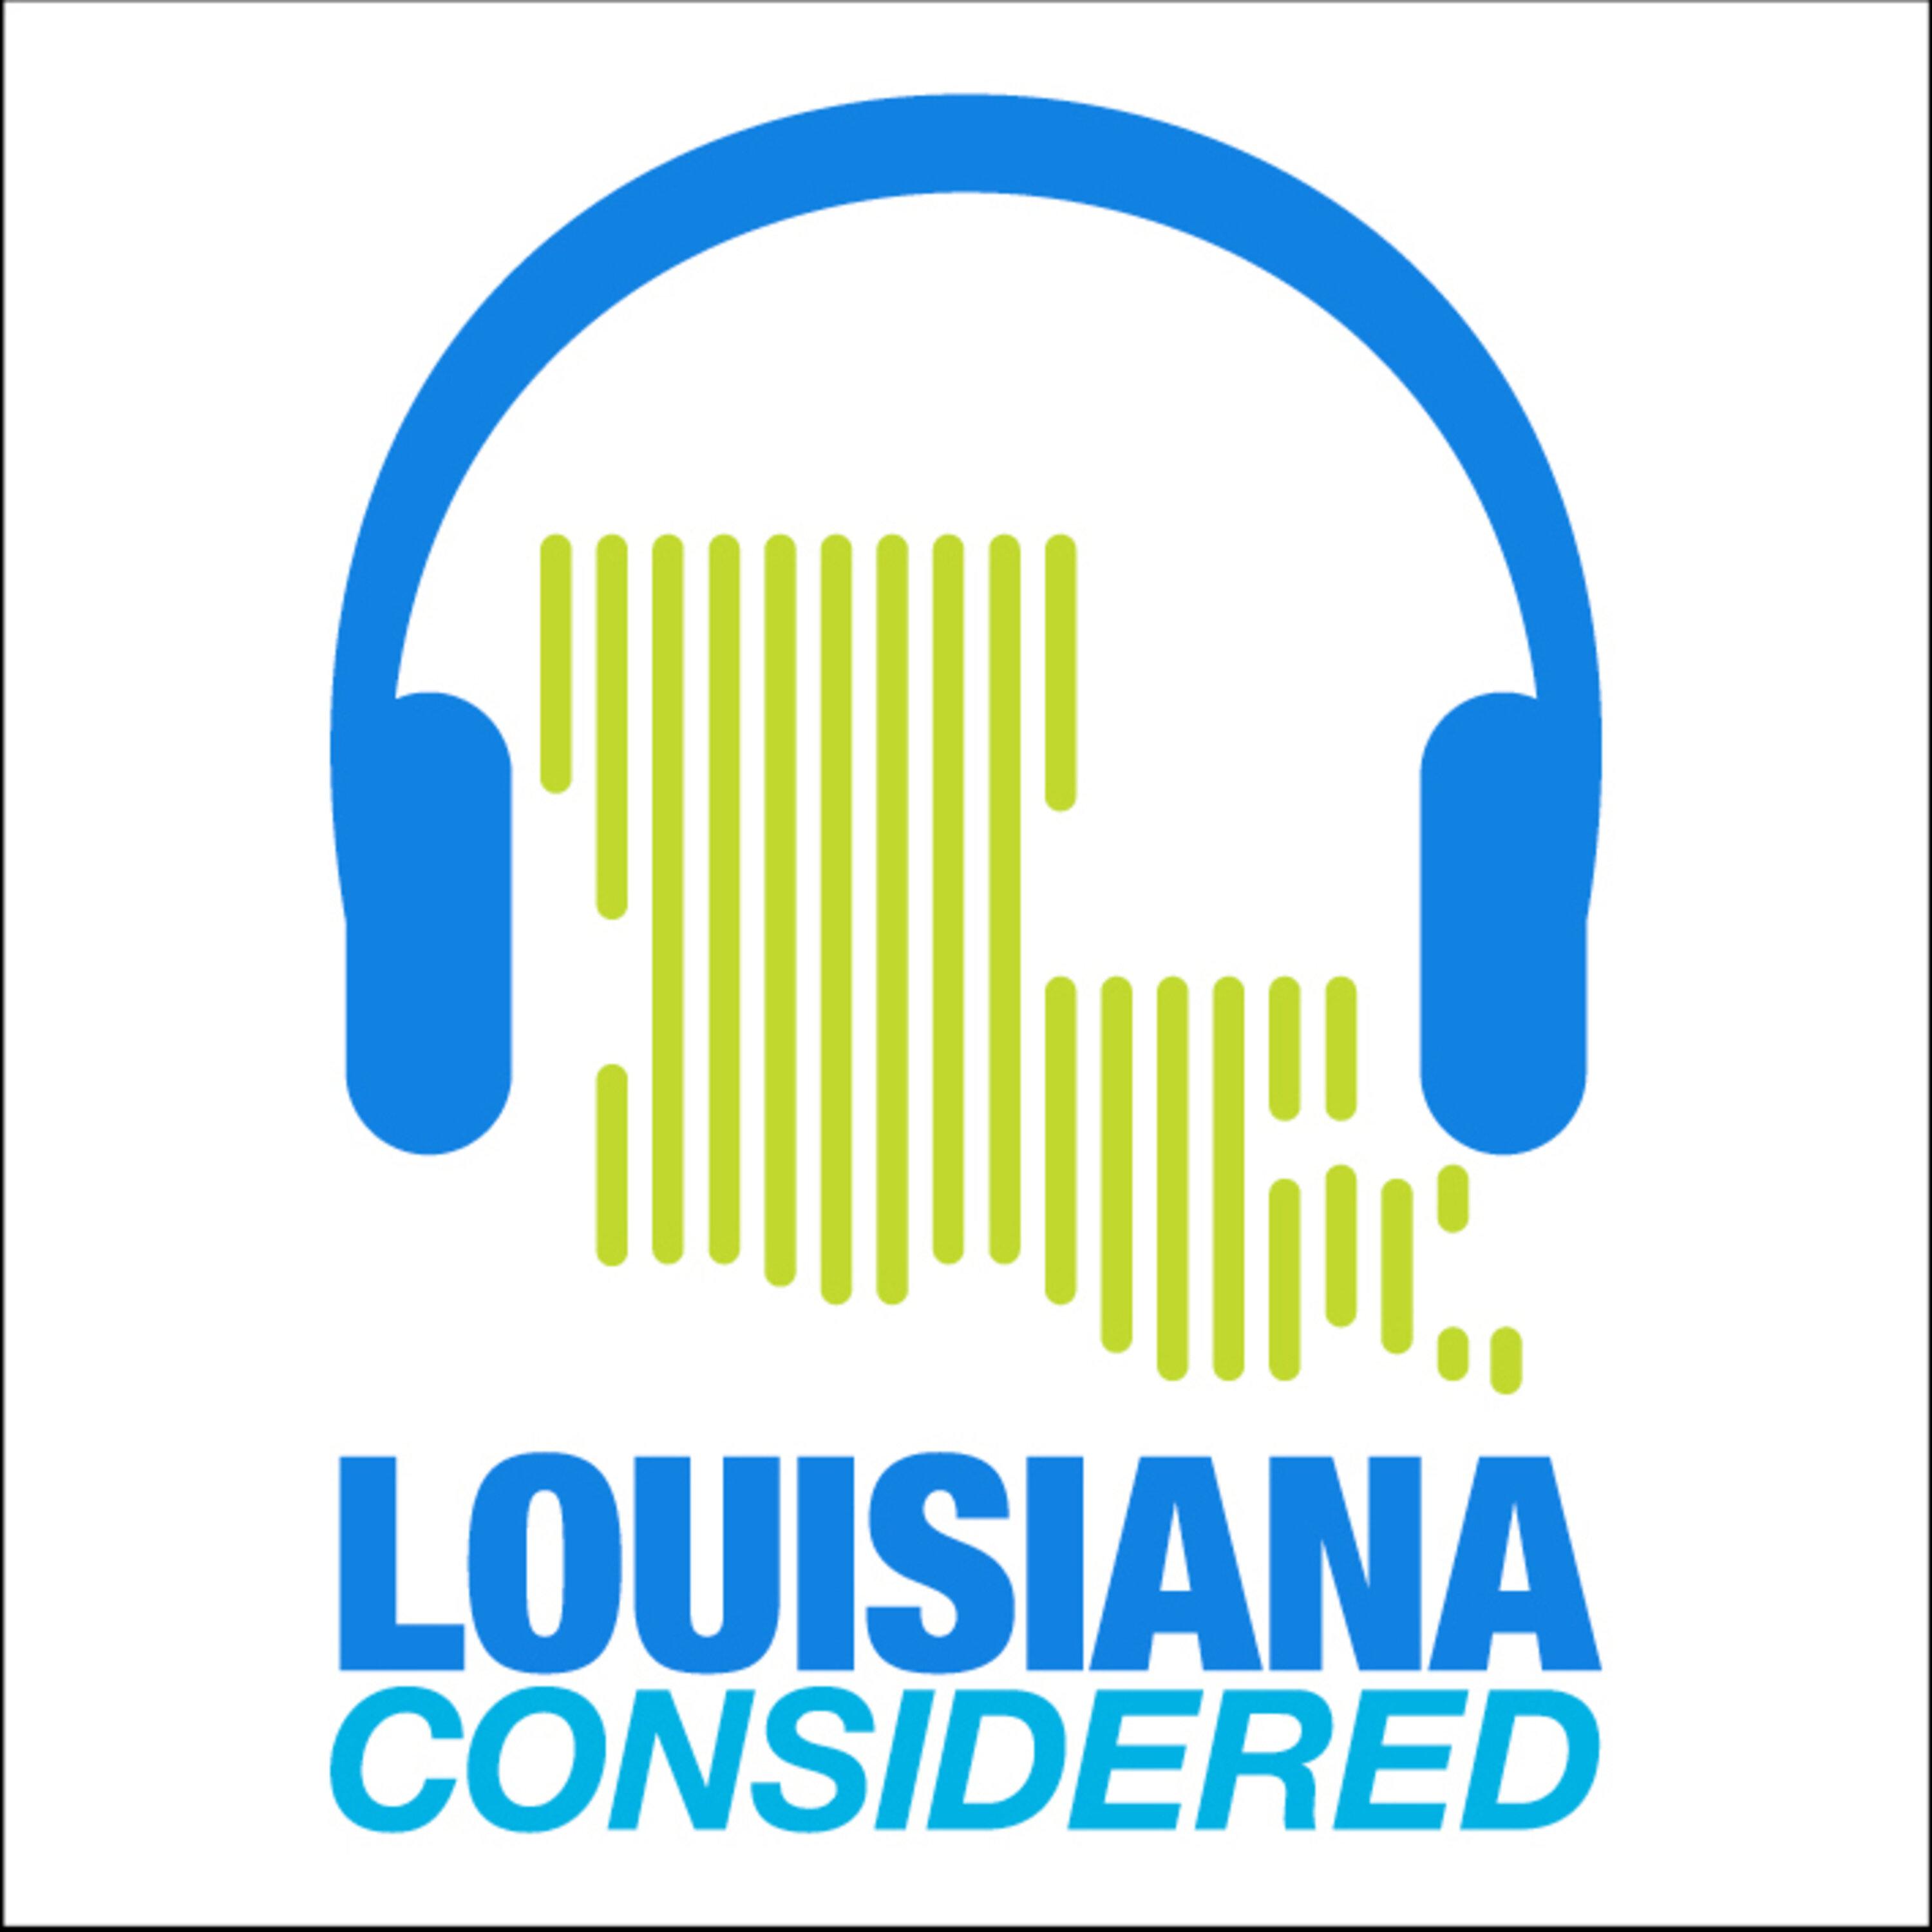 Thumbnail for "Louisiana Considered: NOLA City Councilmember Joe Giarusso talks policy".